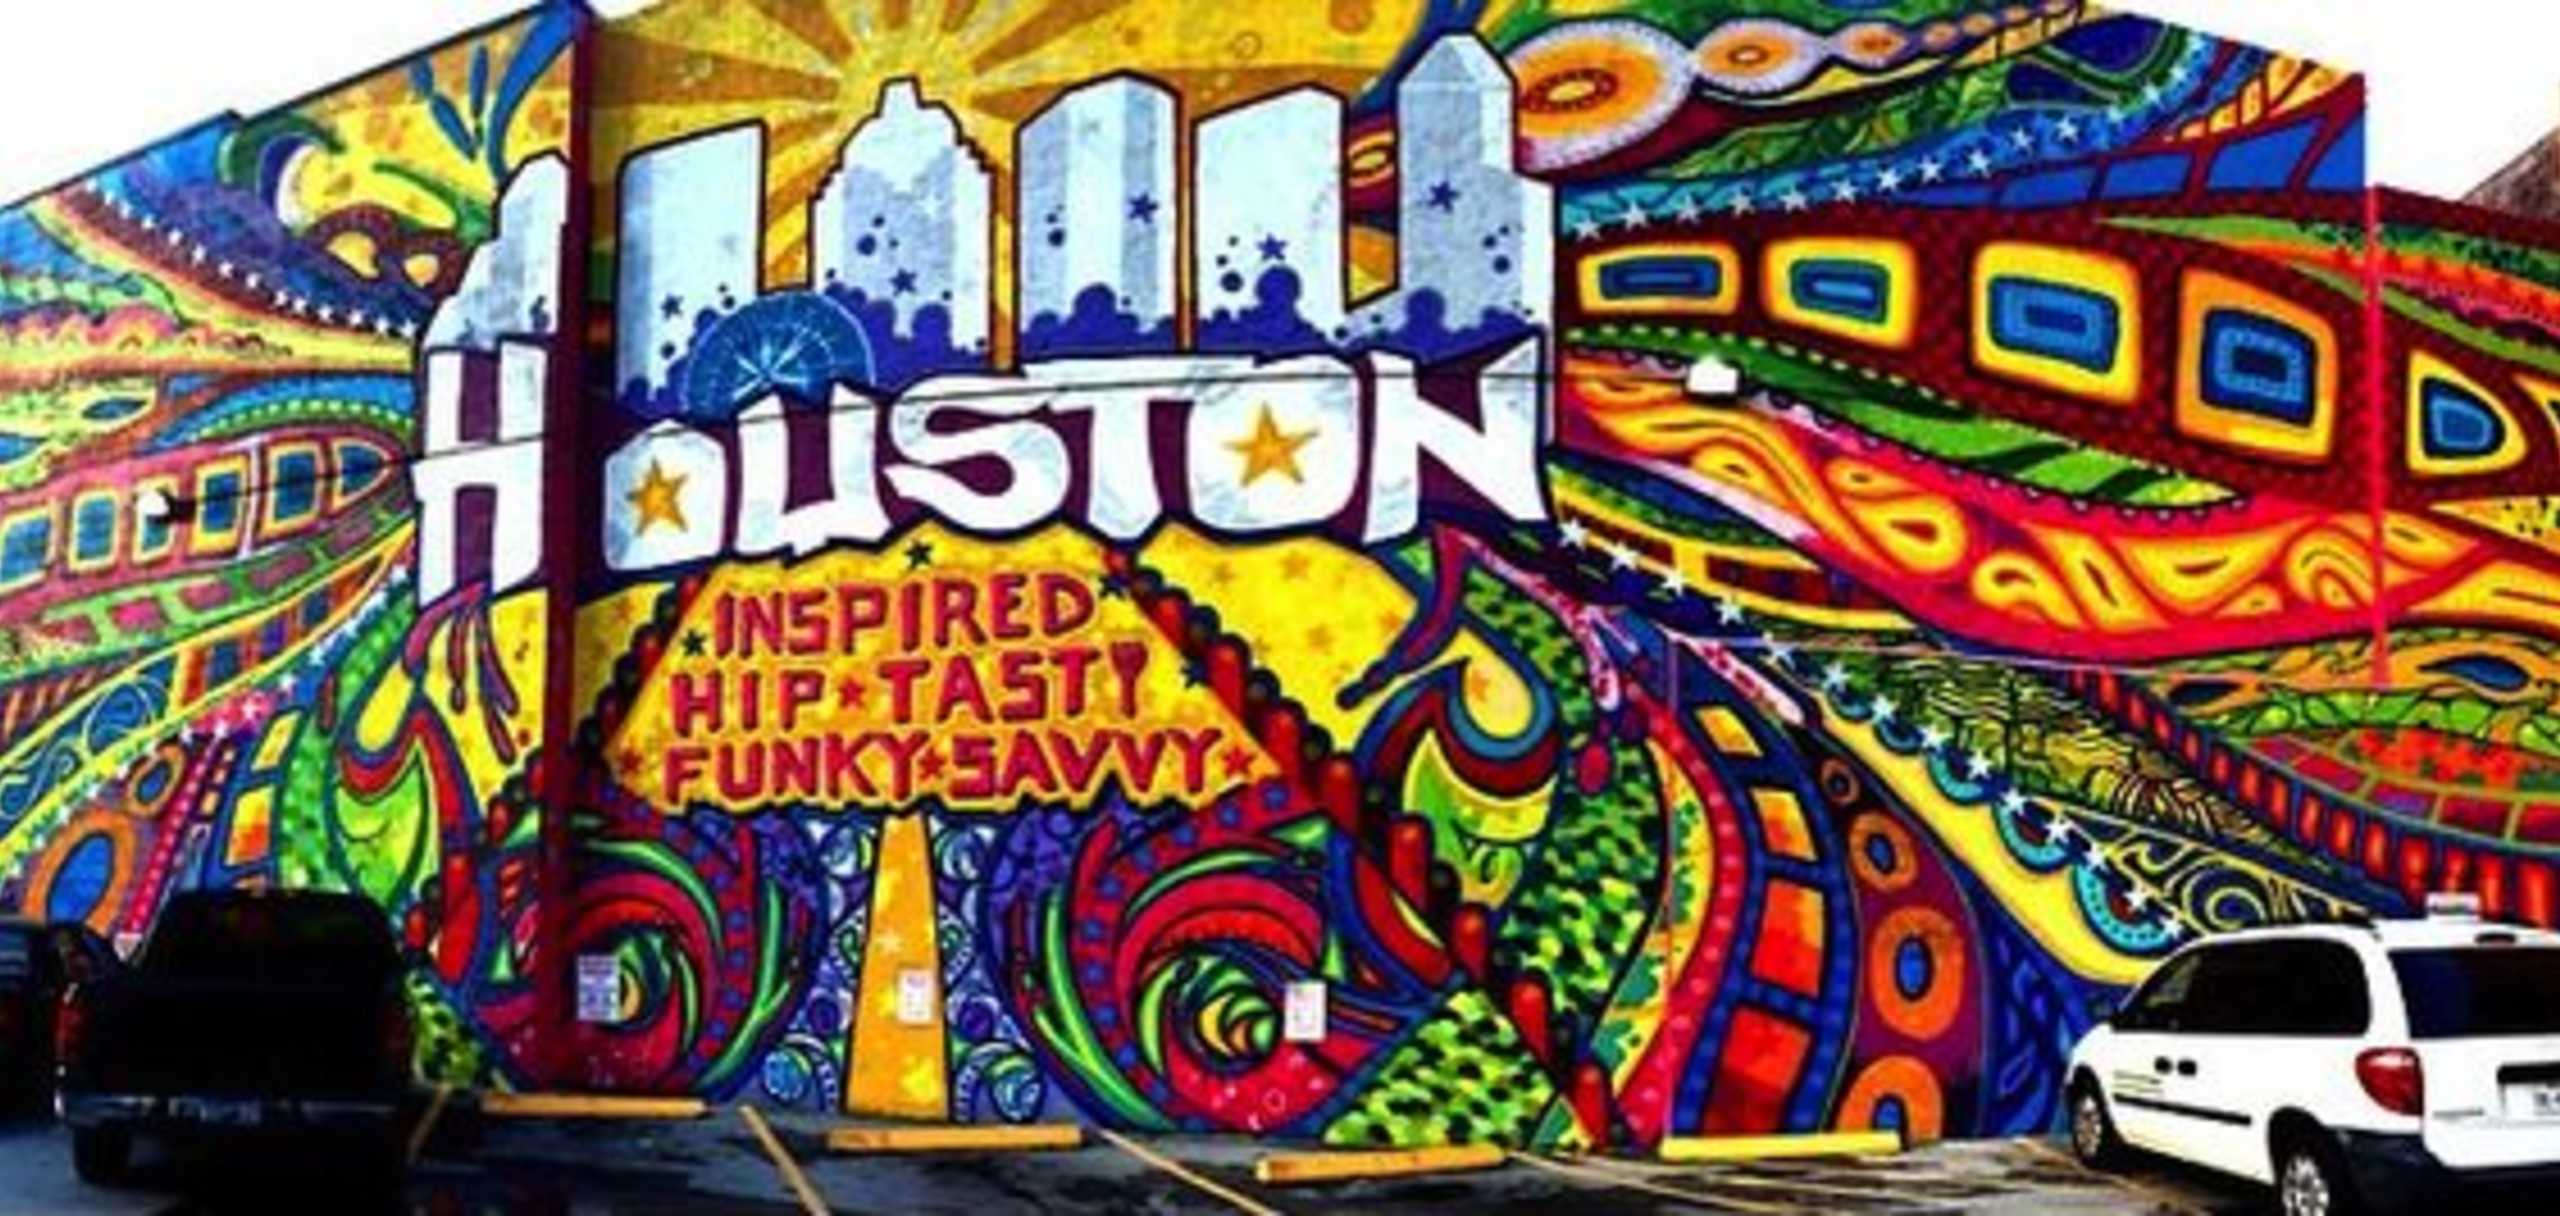 Houston--America's most diversified city! Inspire, Hip, Tasty, Funky, Savvy